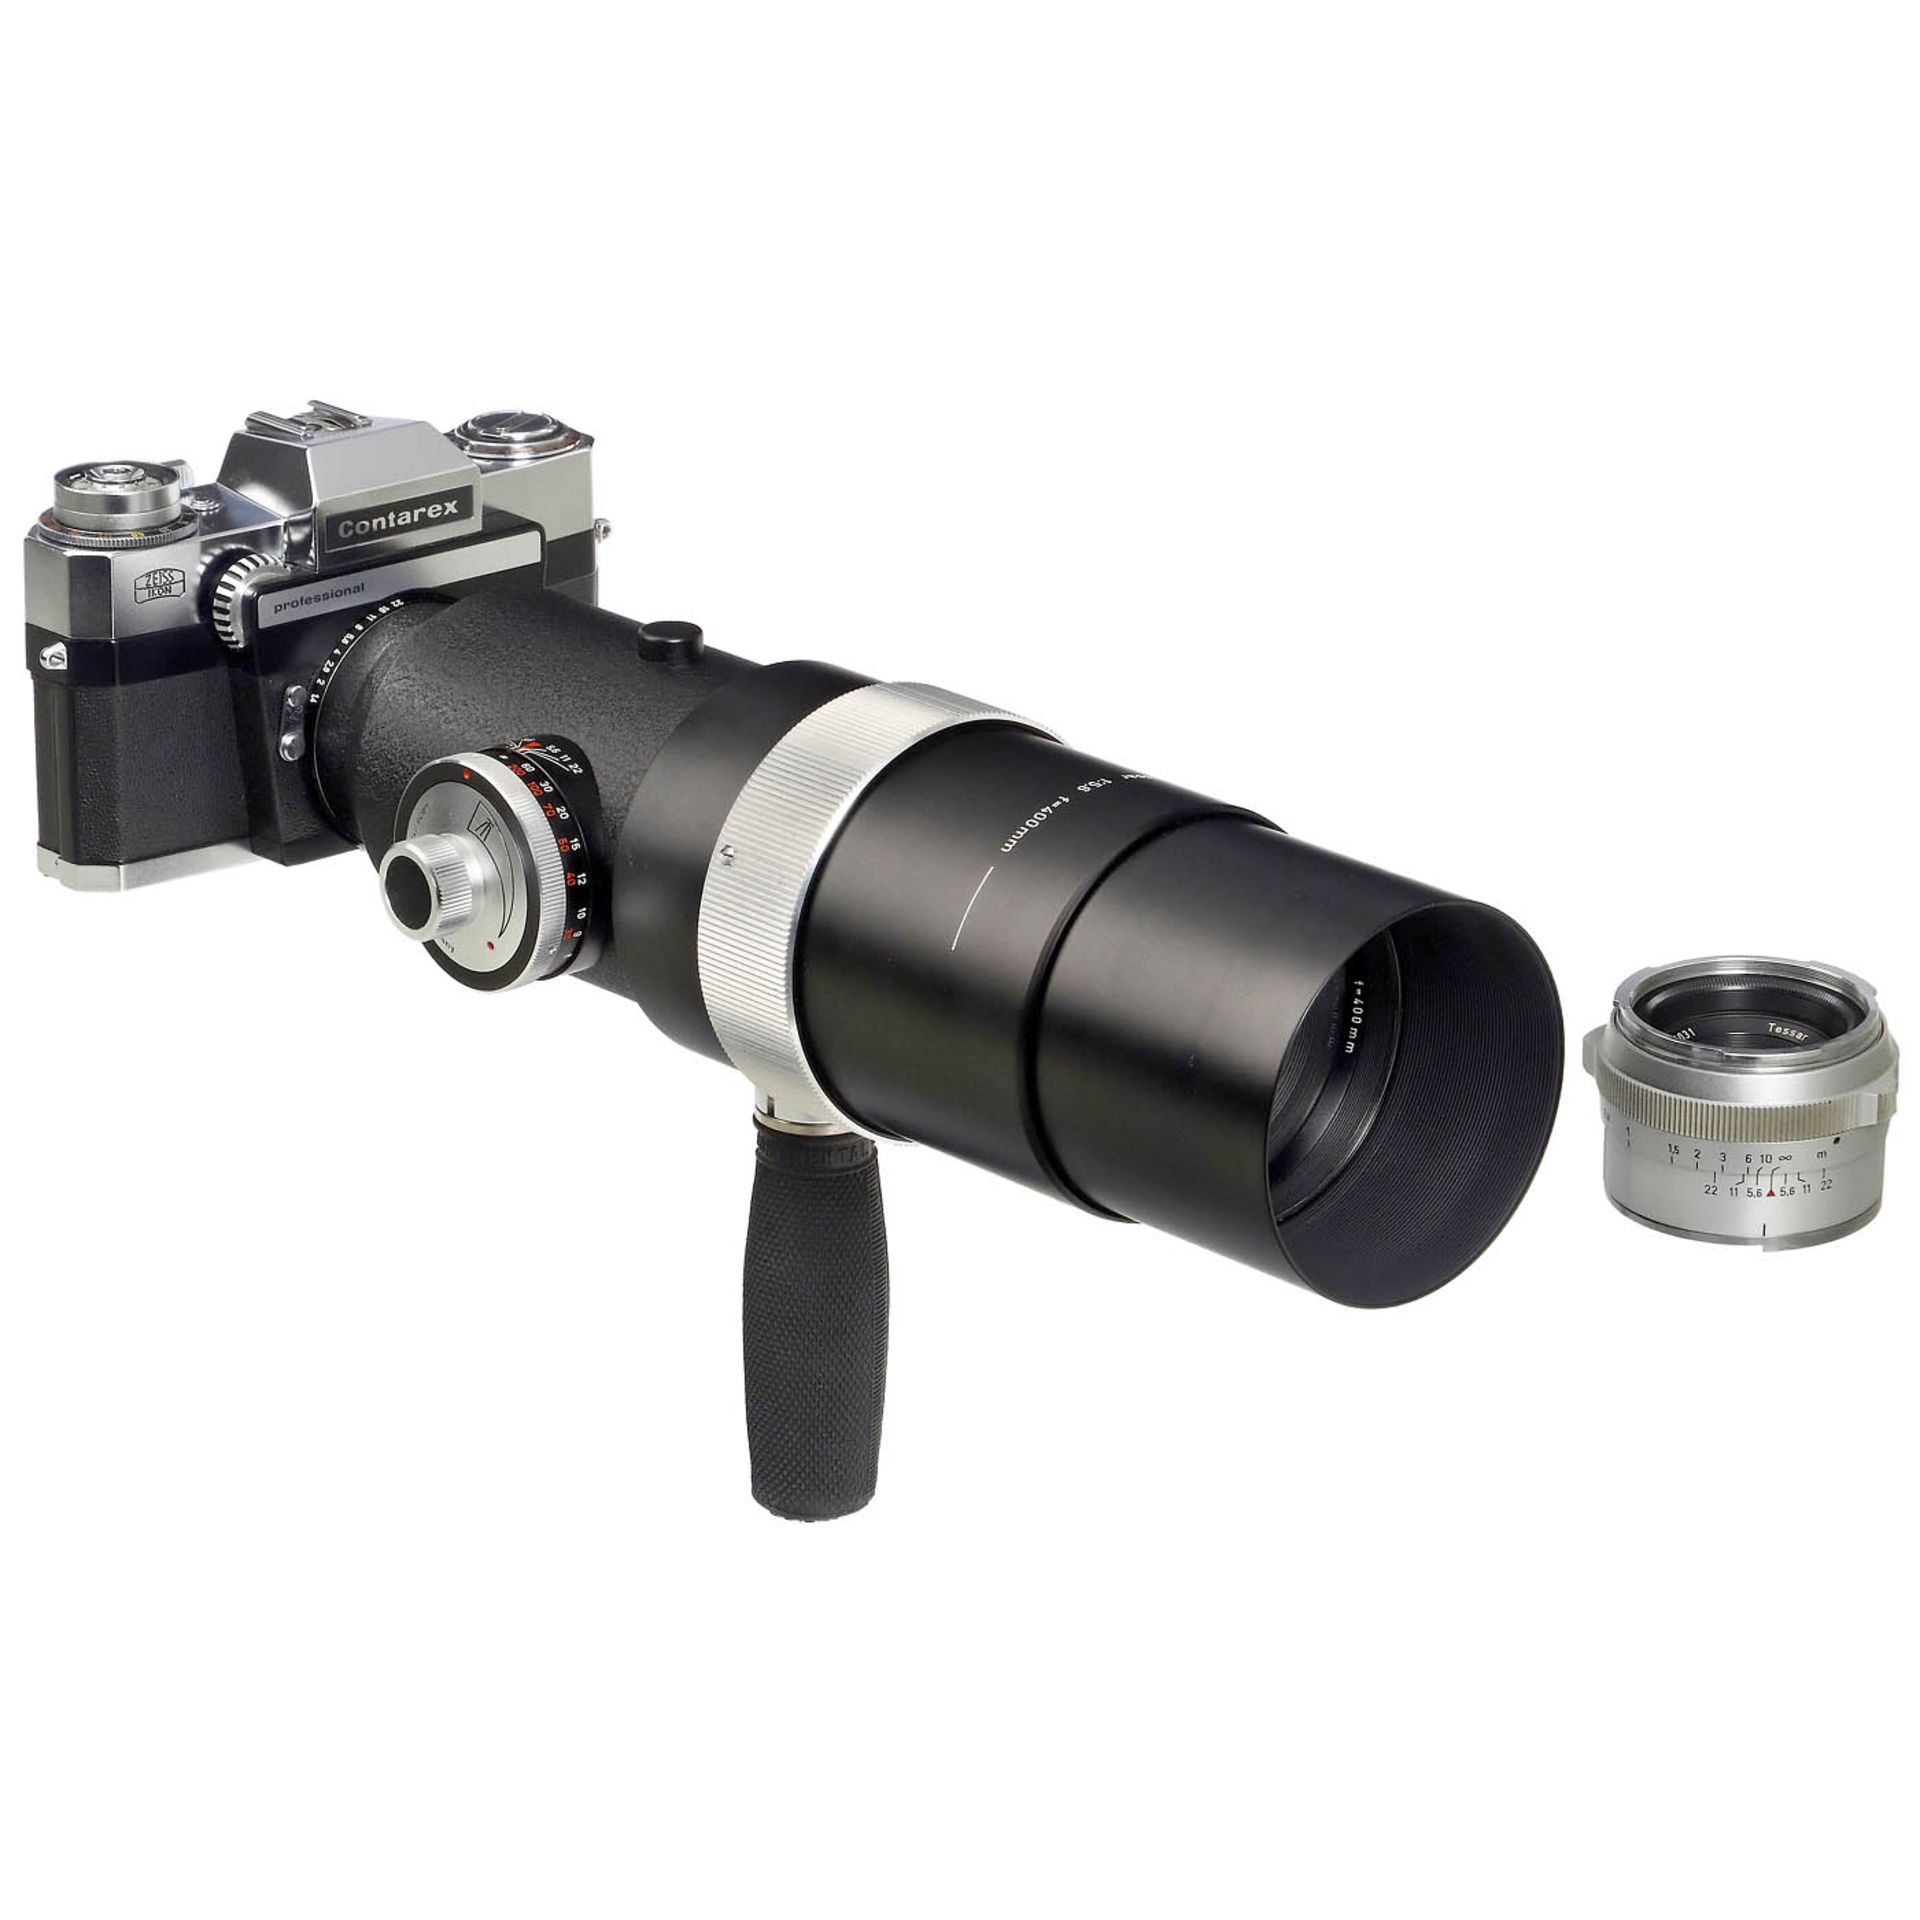 Contarex Tele-Tessar 5.6/400 mm Lens